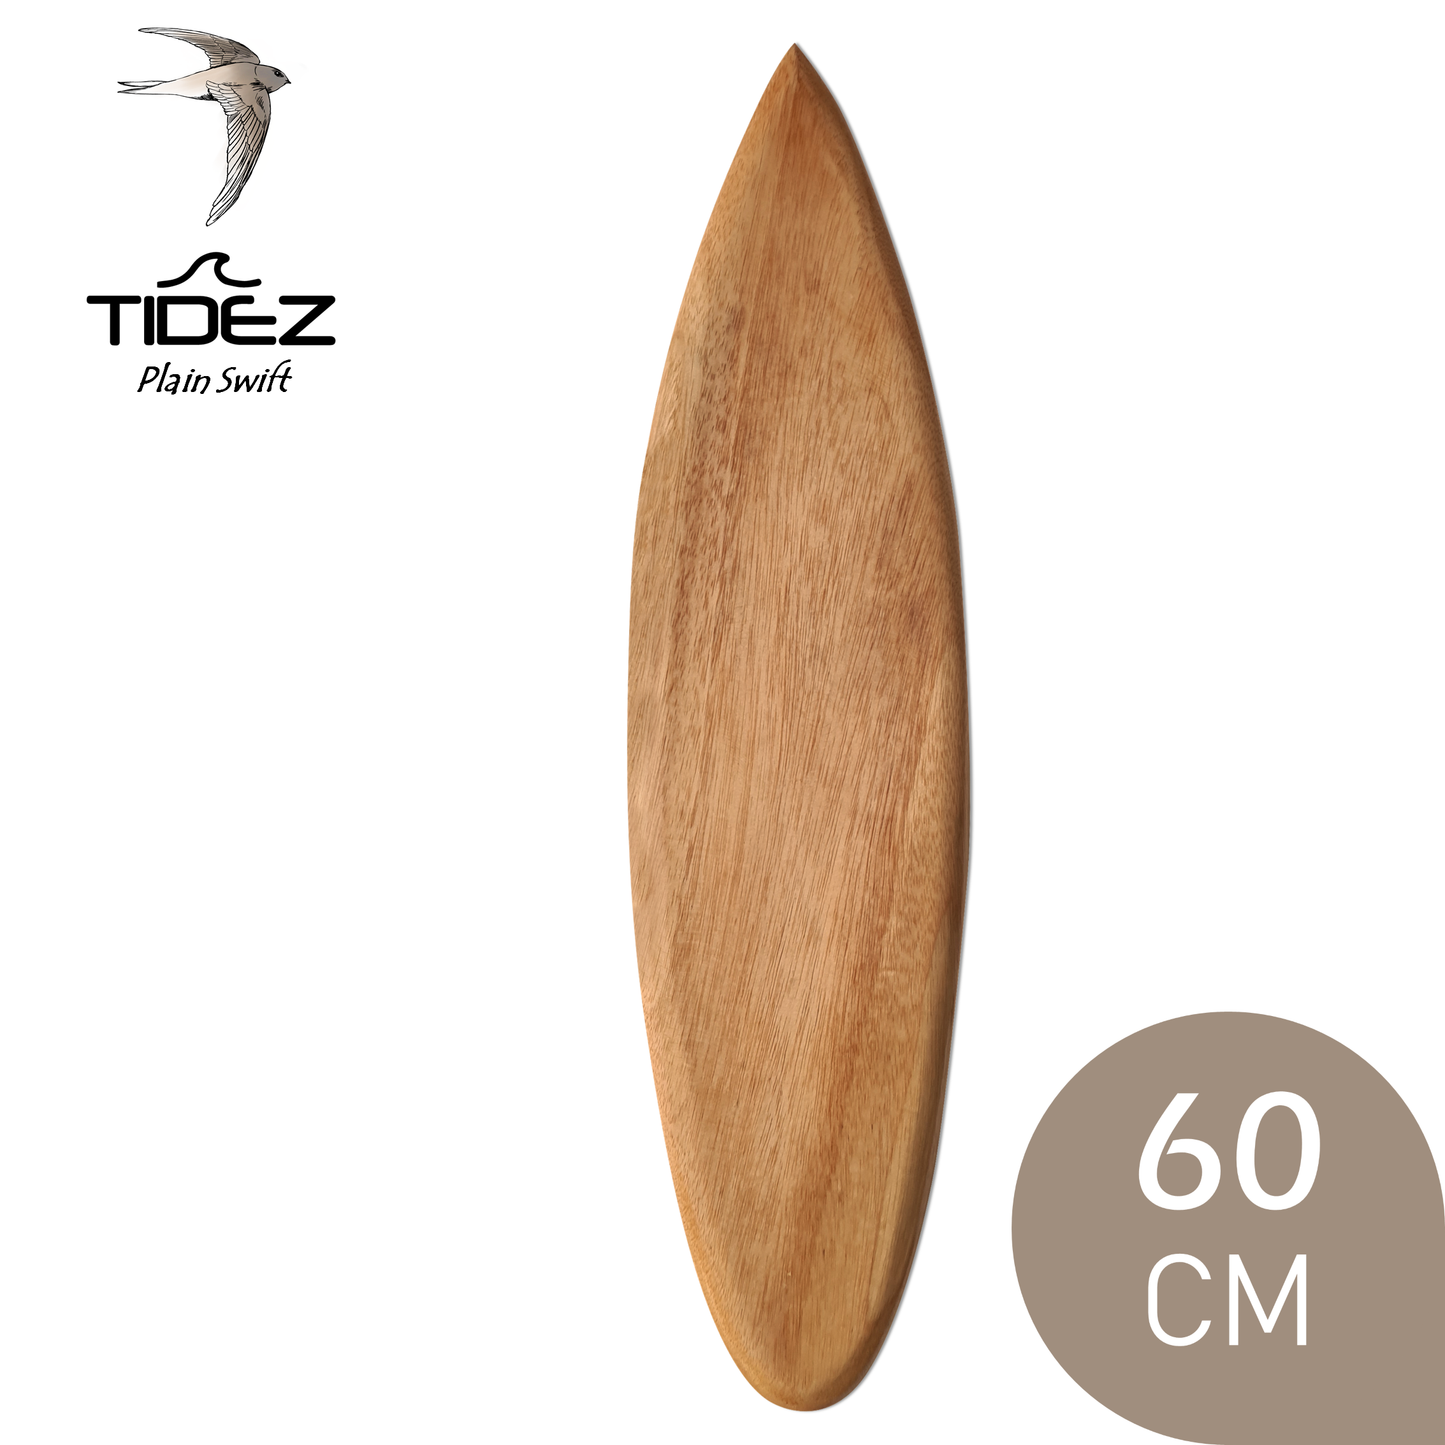 Tidez Plain Swift 60cm